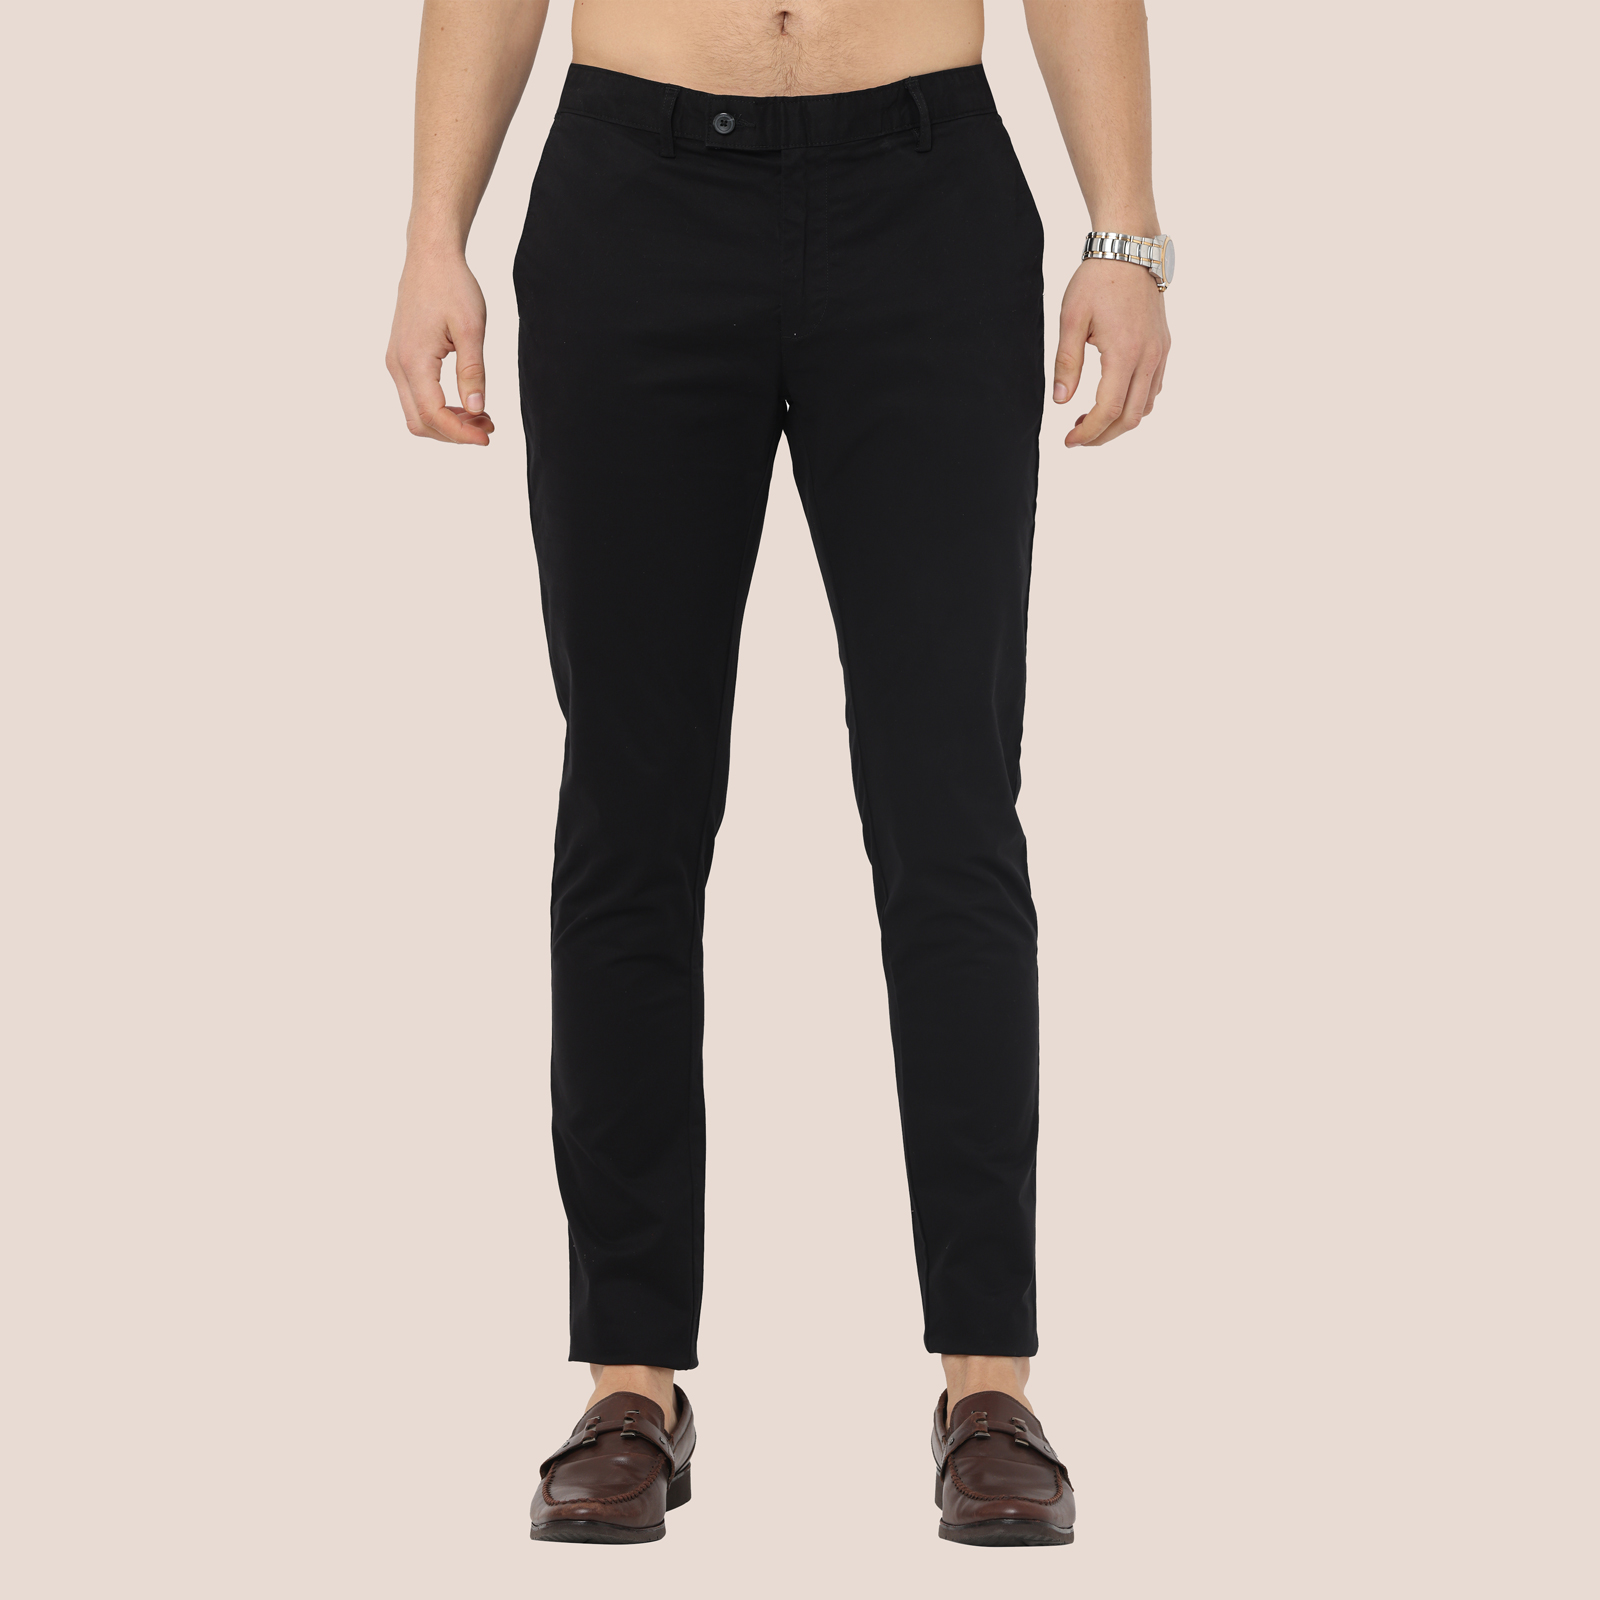 Buy Women Black Regular Fit Solid Casual Trousers Online  739089  Allen  Solly